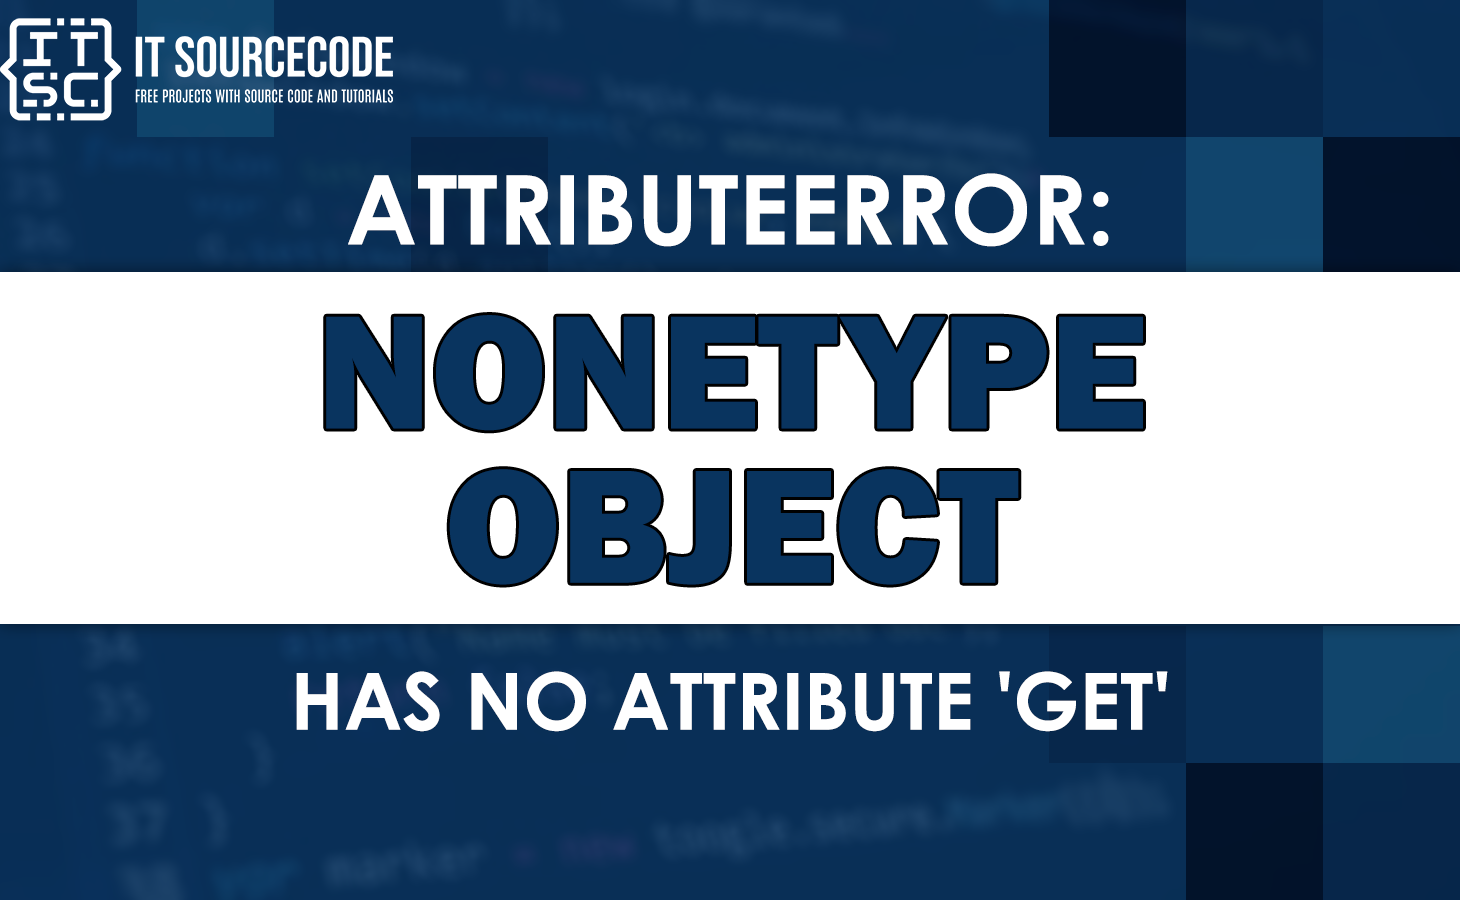 Attributeerror nonetype object has no attribute get